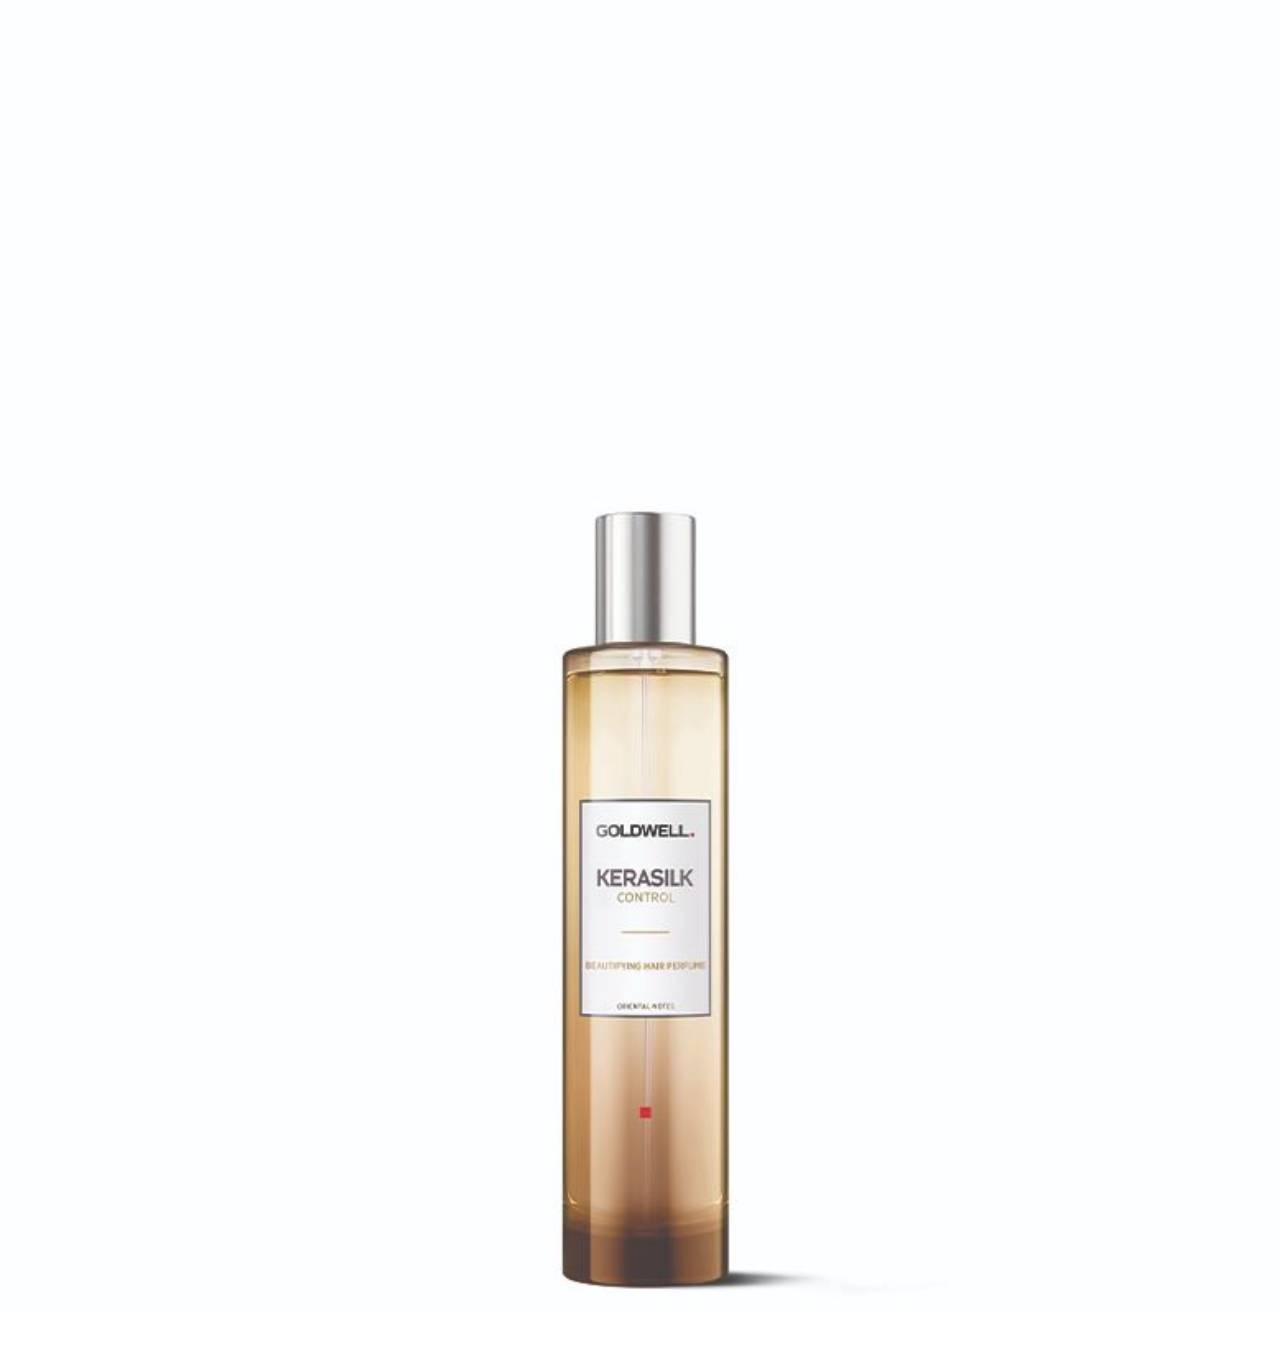  Goldwell – Kerasilk Control Beautifying Hair Perfume je parfem za kosu sa drvenastim podtonom. 